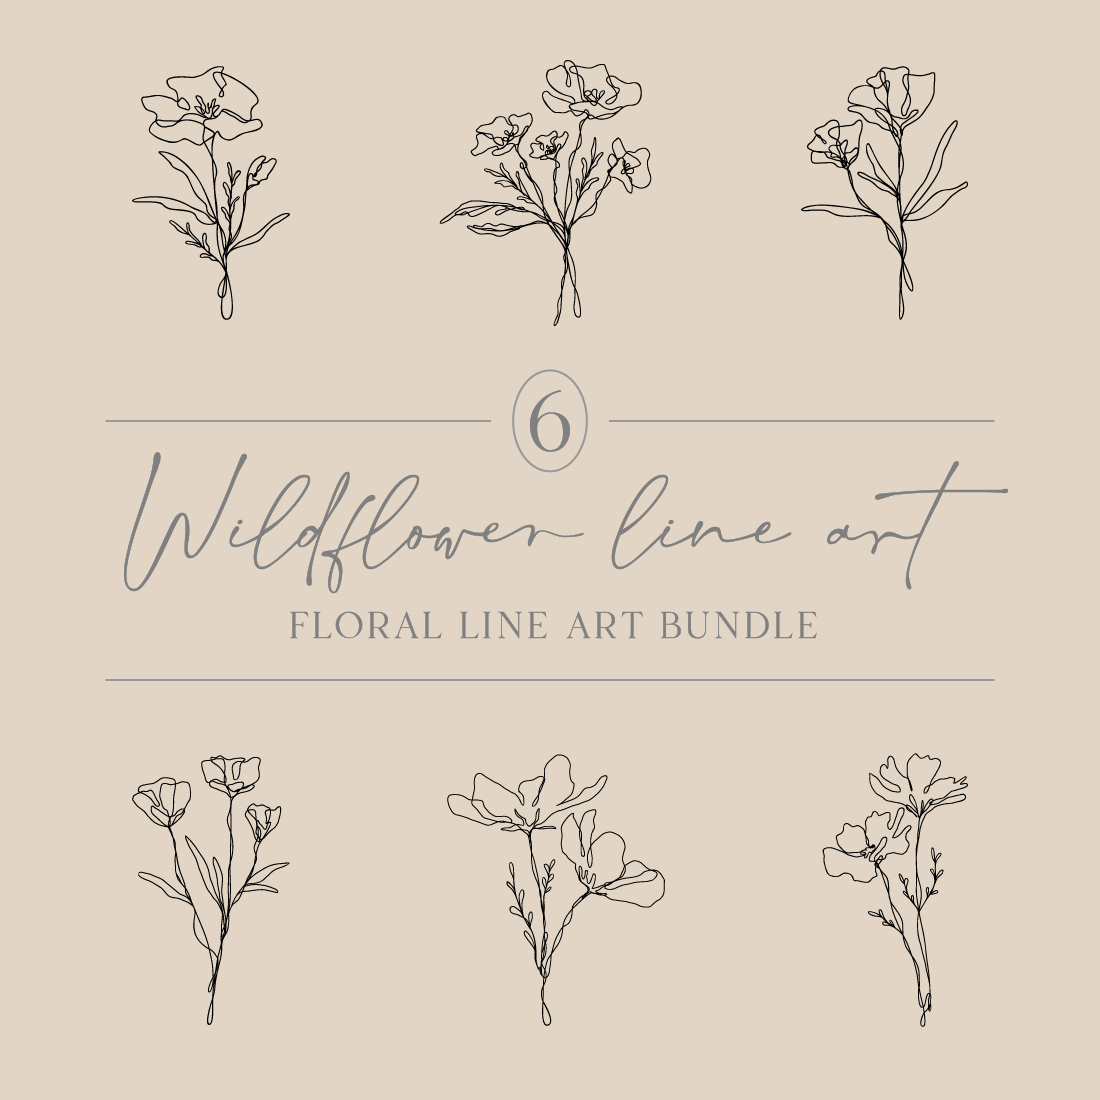 Floral Line Art Bundle Of 6 | Continuous Line Wildflower Designs cover image.